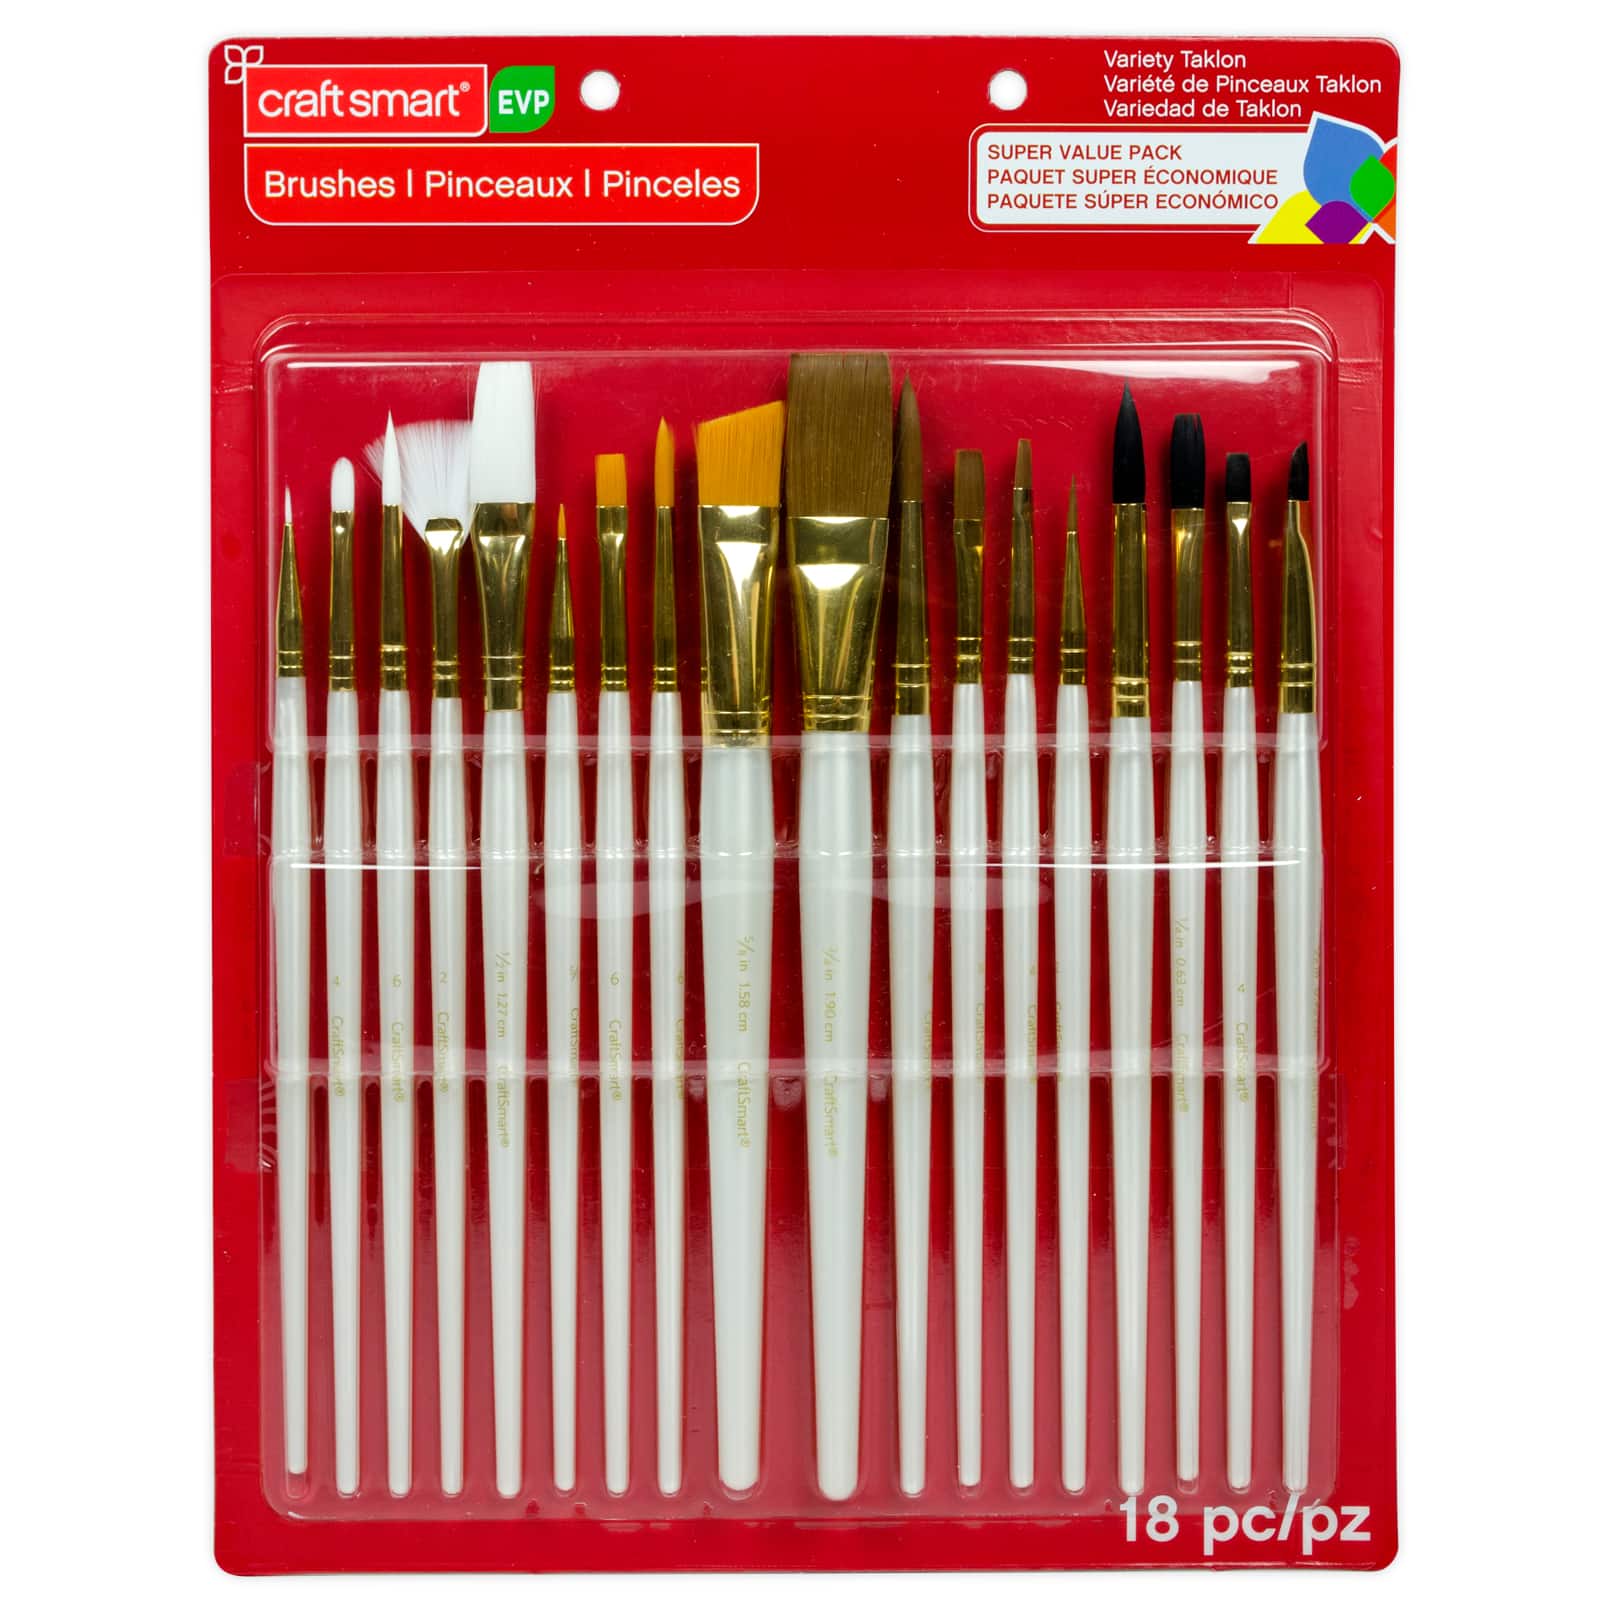 Craft Smart 18-Piece Variety Taklon Brush Super Value Pack